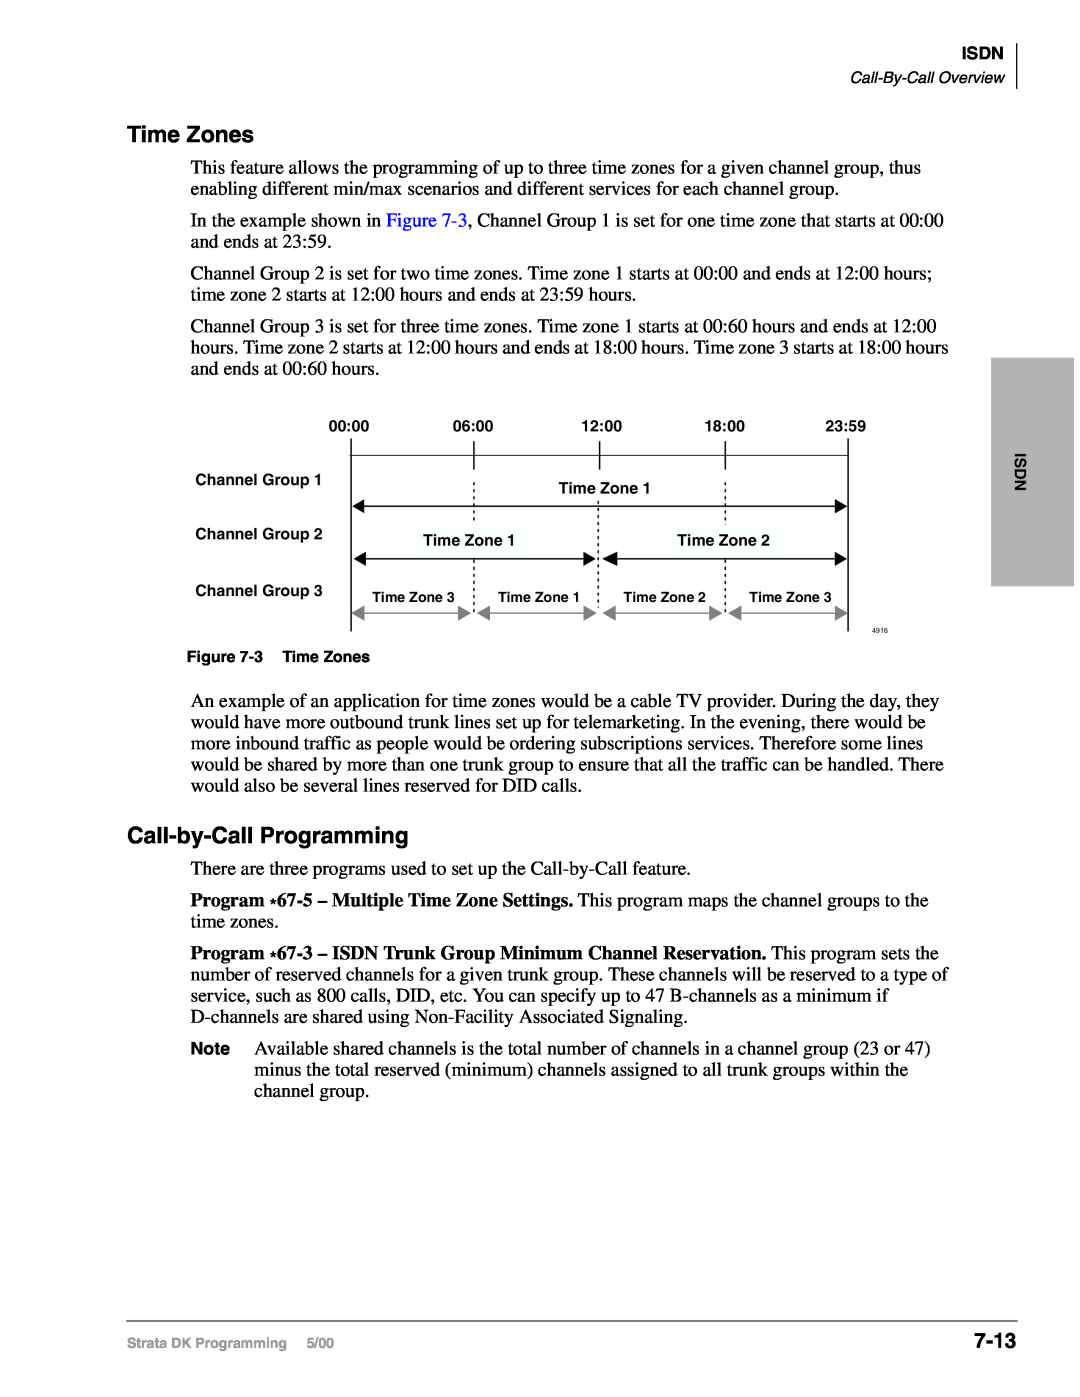 Toshiba dk14, DK40I, DK424I manual Time Zones, Call-by-CallProgramming, 7-13 